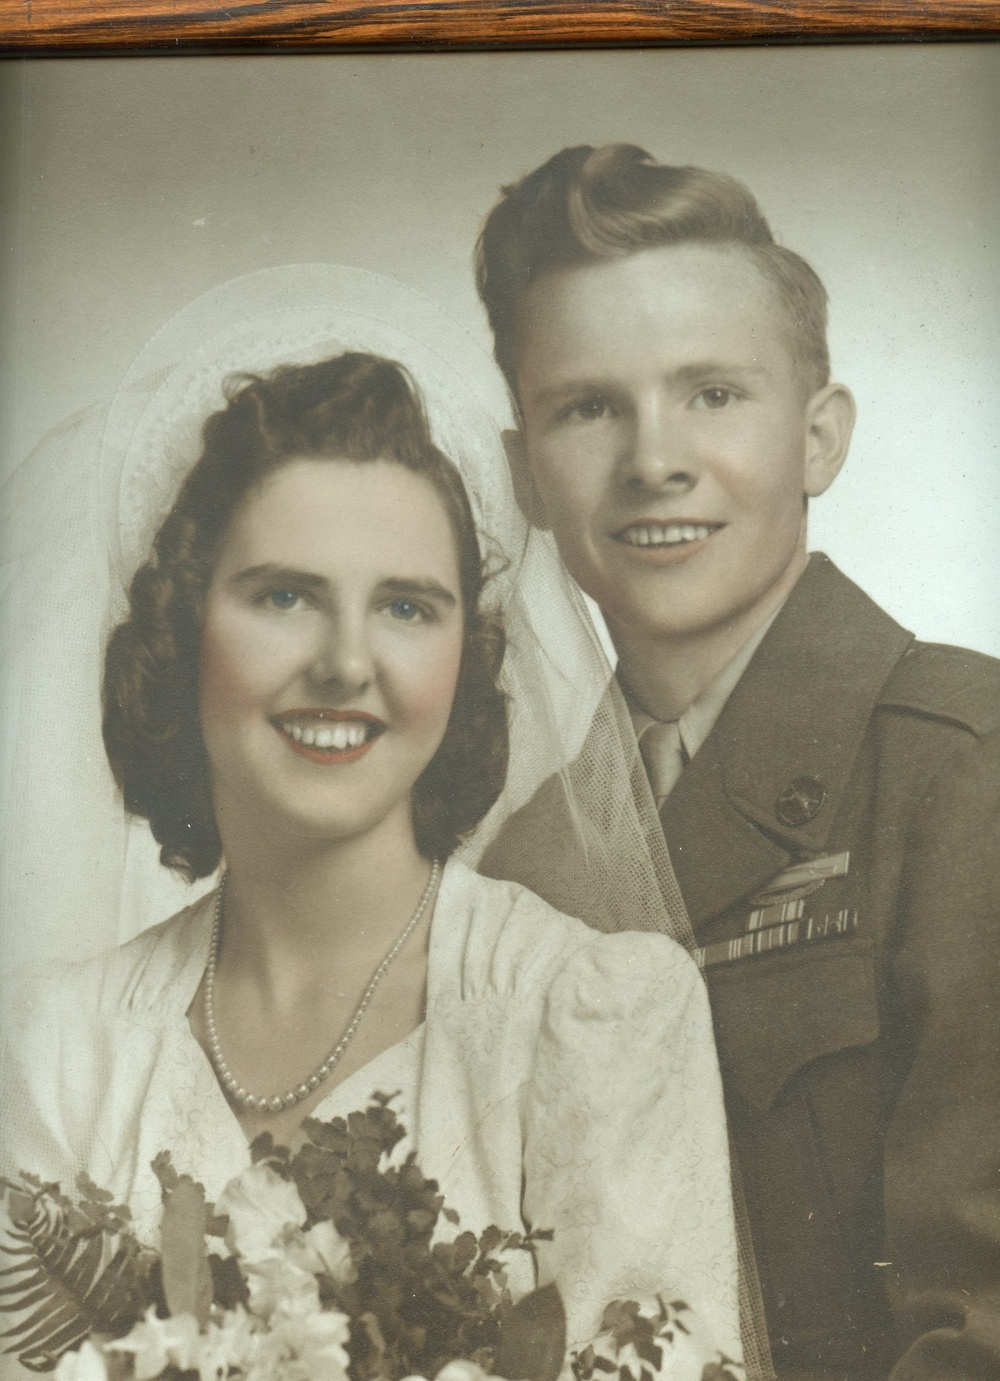 'We were taken prisoner' WWII veteran tells his story